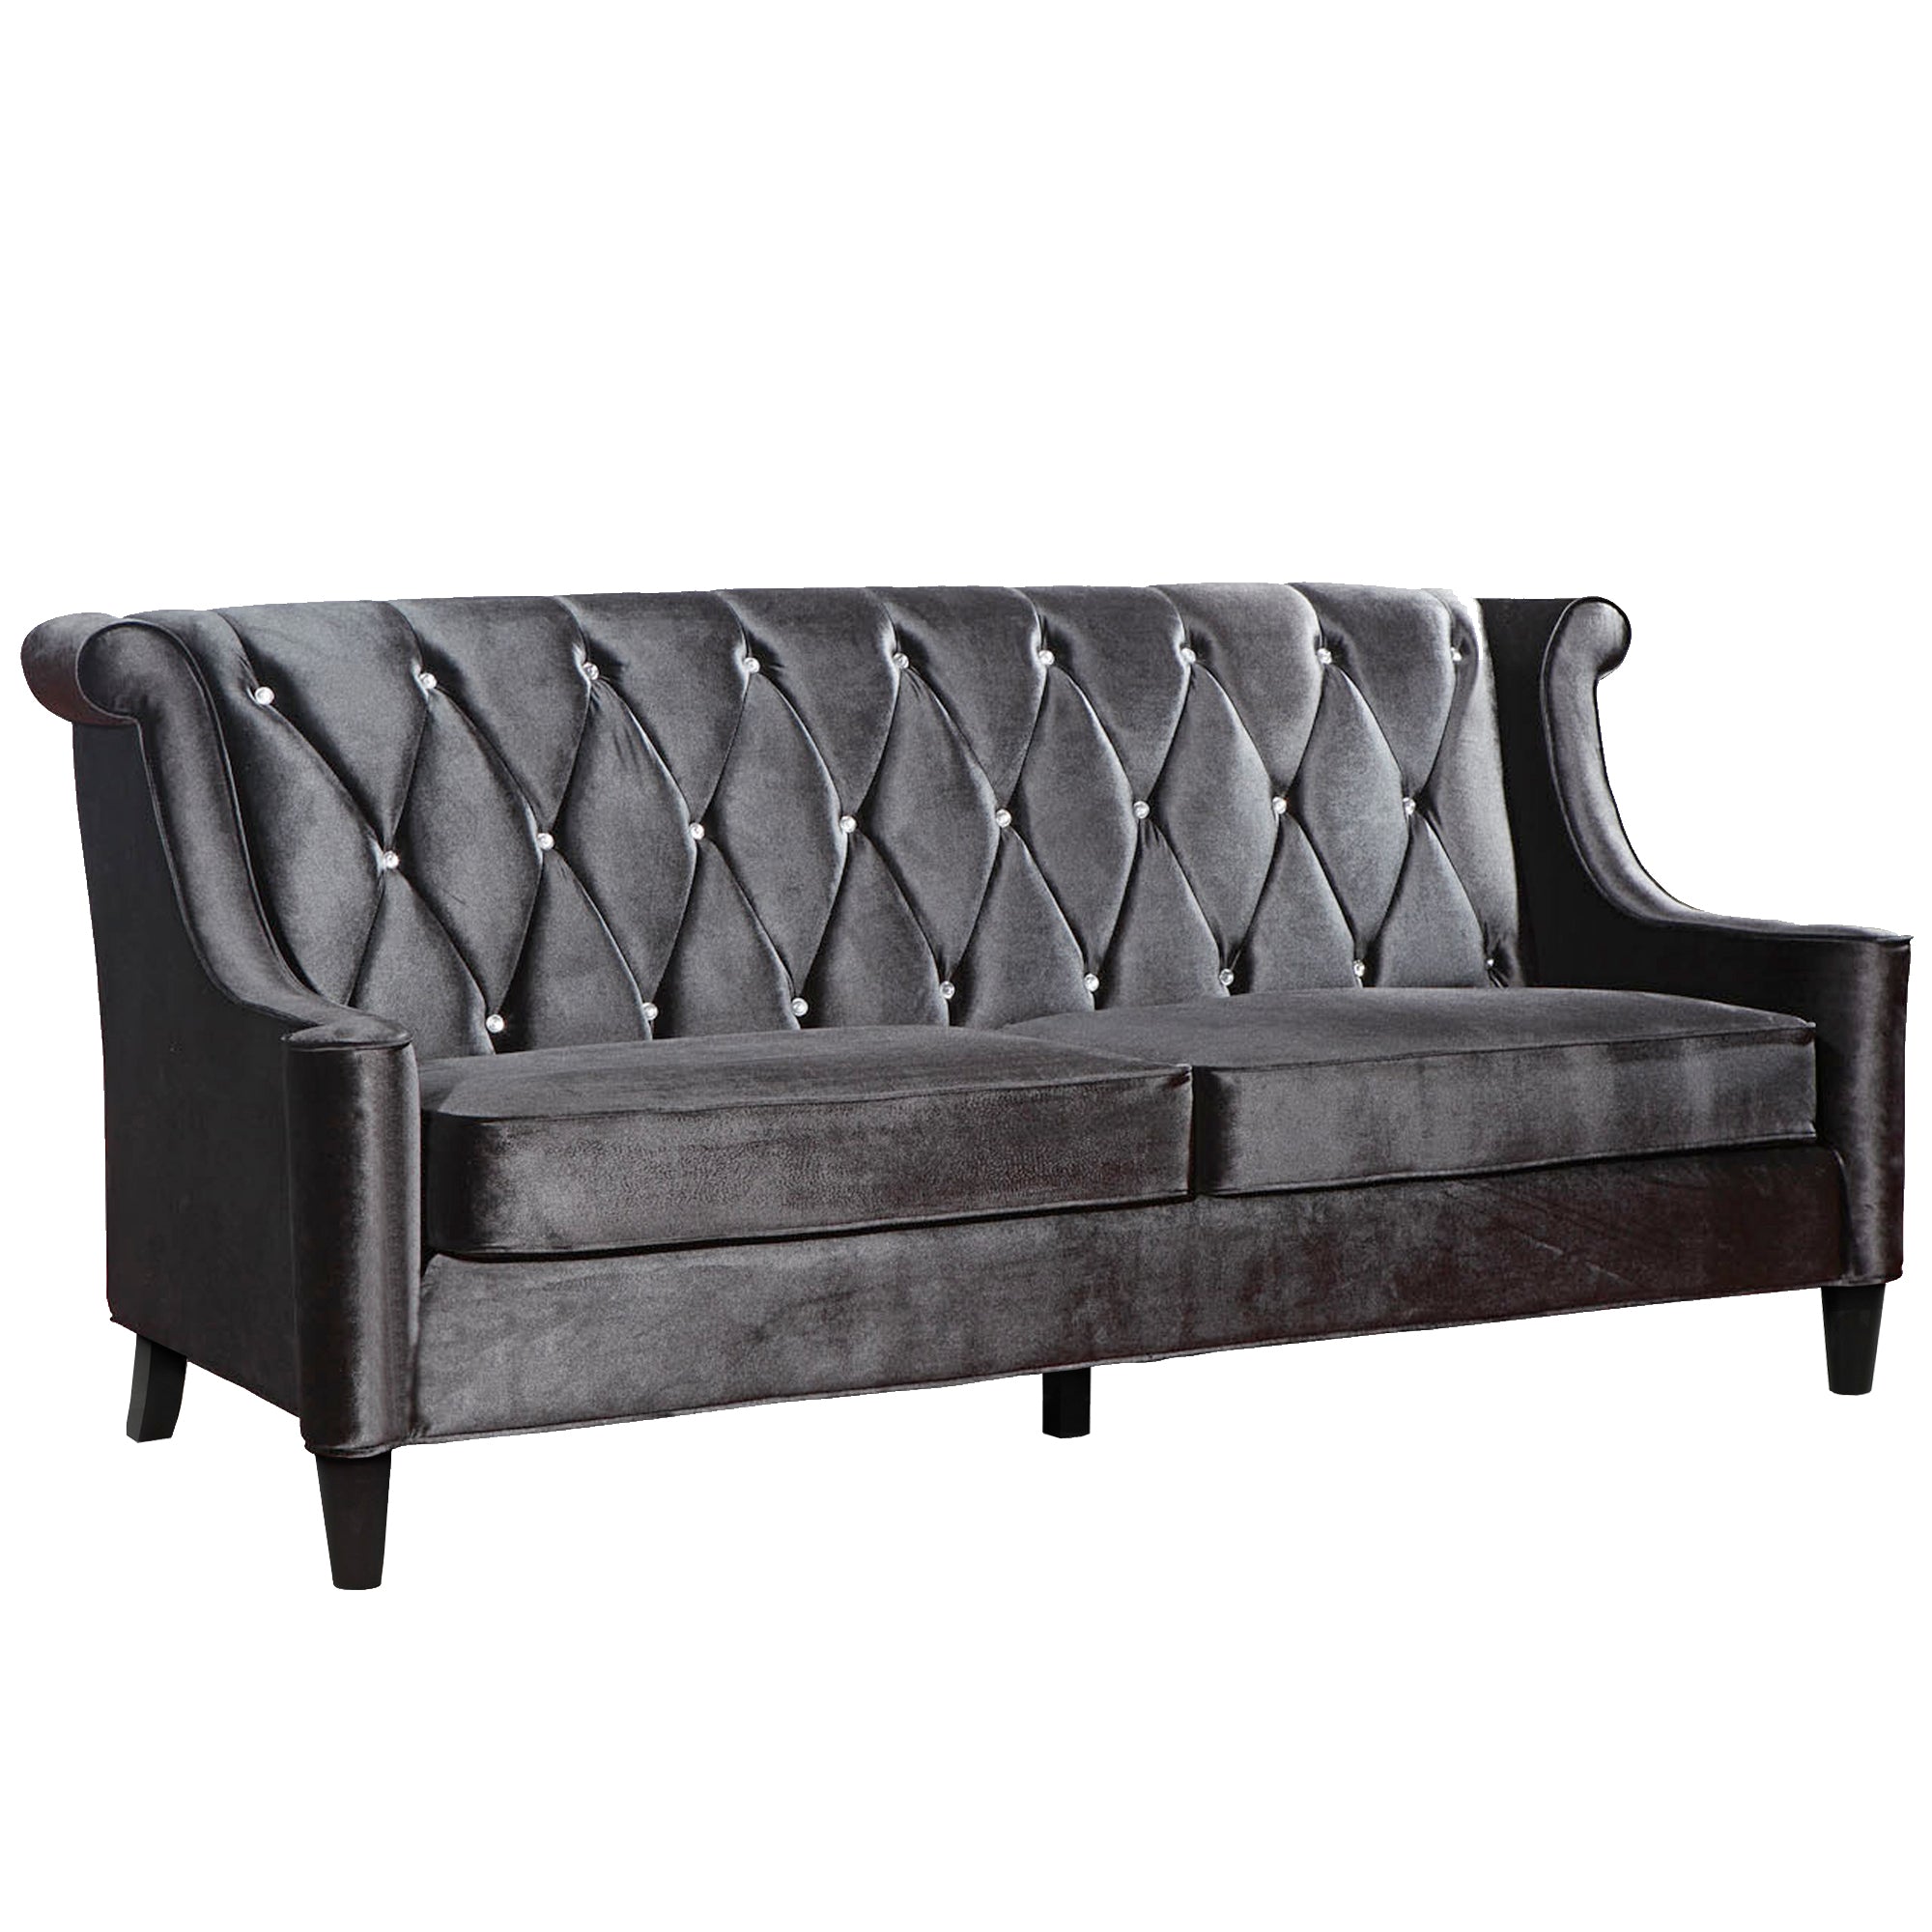 Armen Living Lc8443black Barrister Sofa In Black Velvet With Crystal Buttons